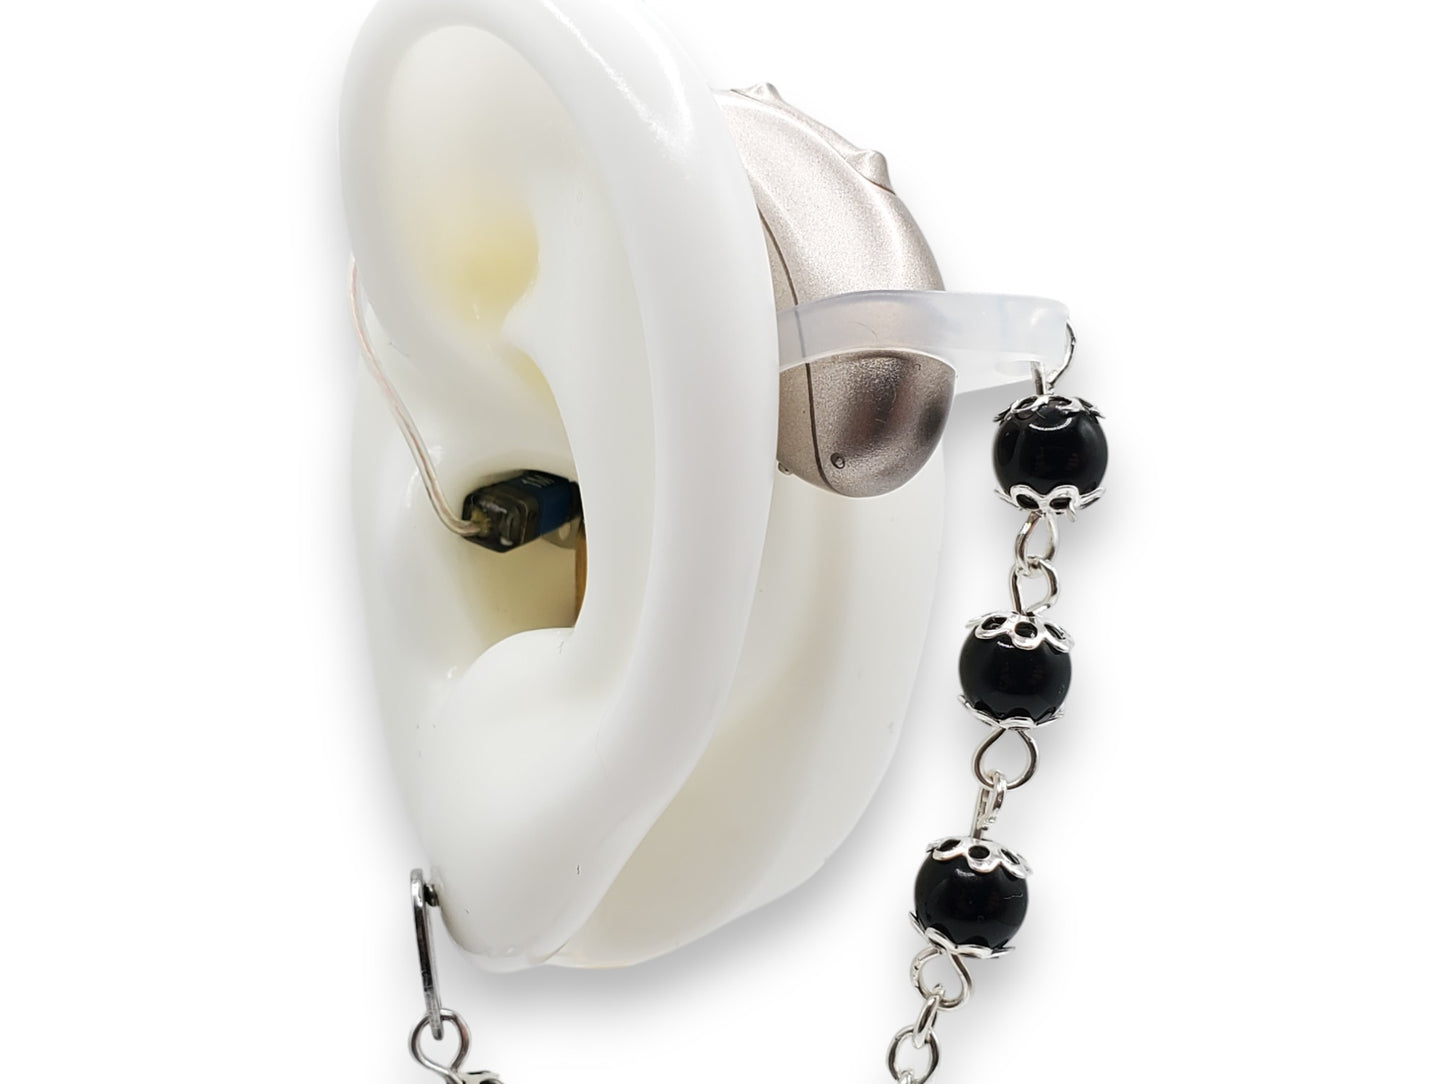 Black Glass Pearl Chain EarLinks - Hearing Aids